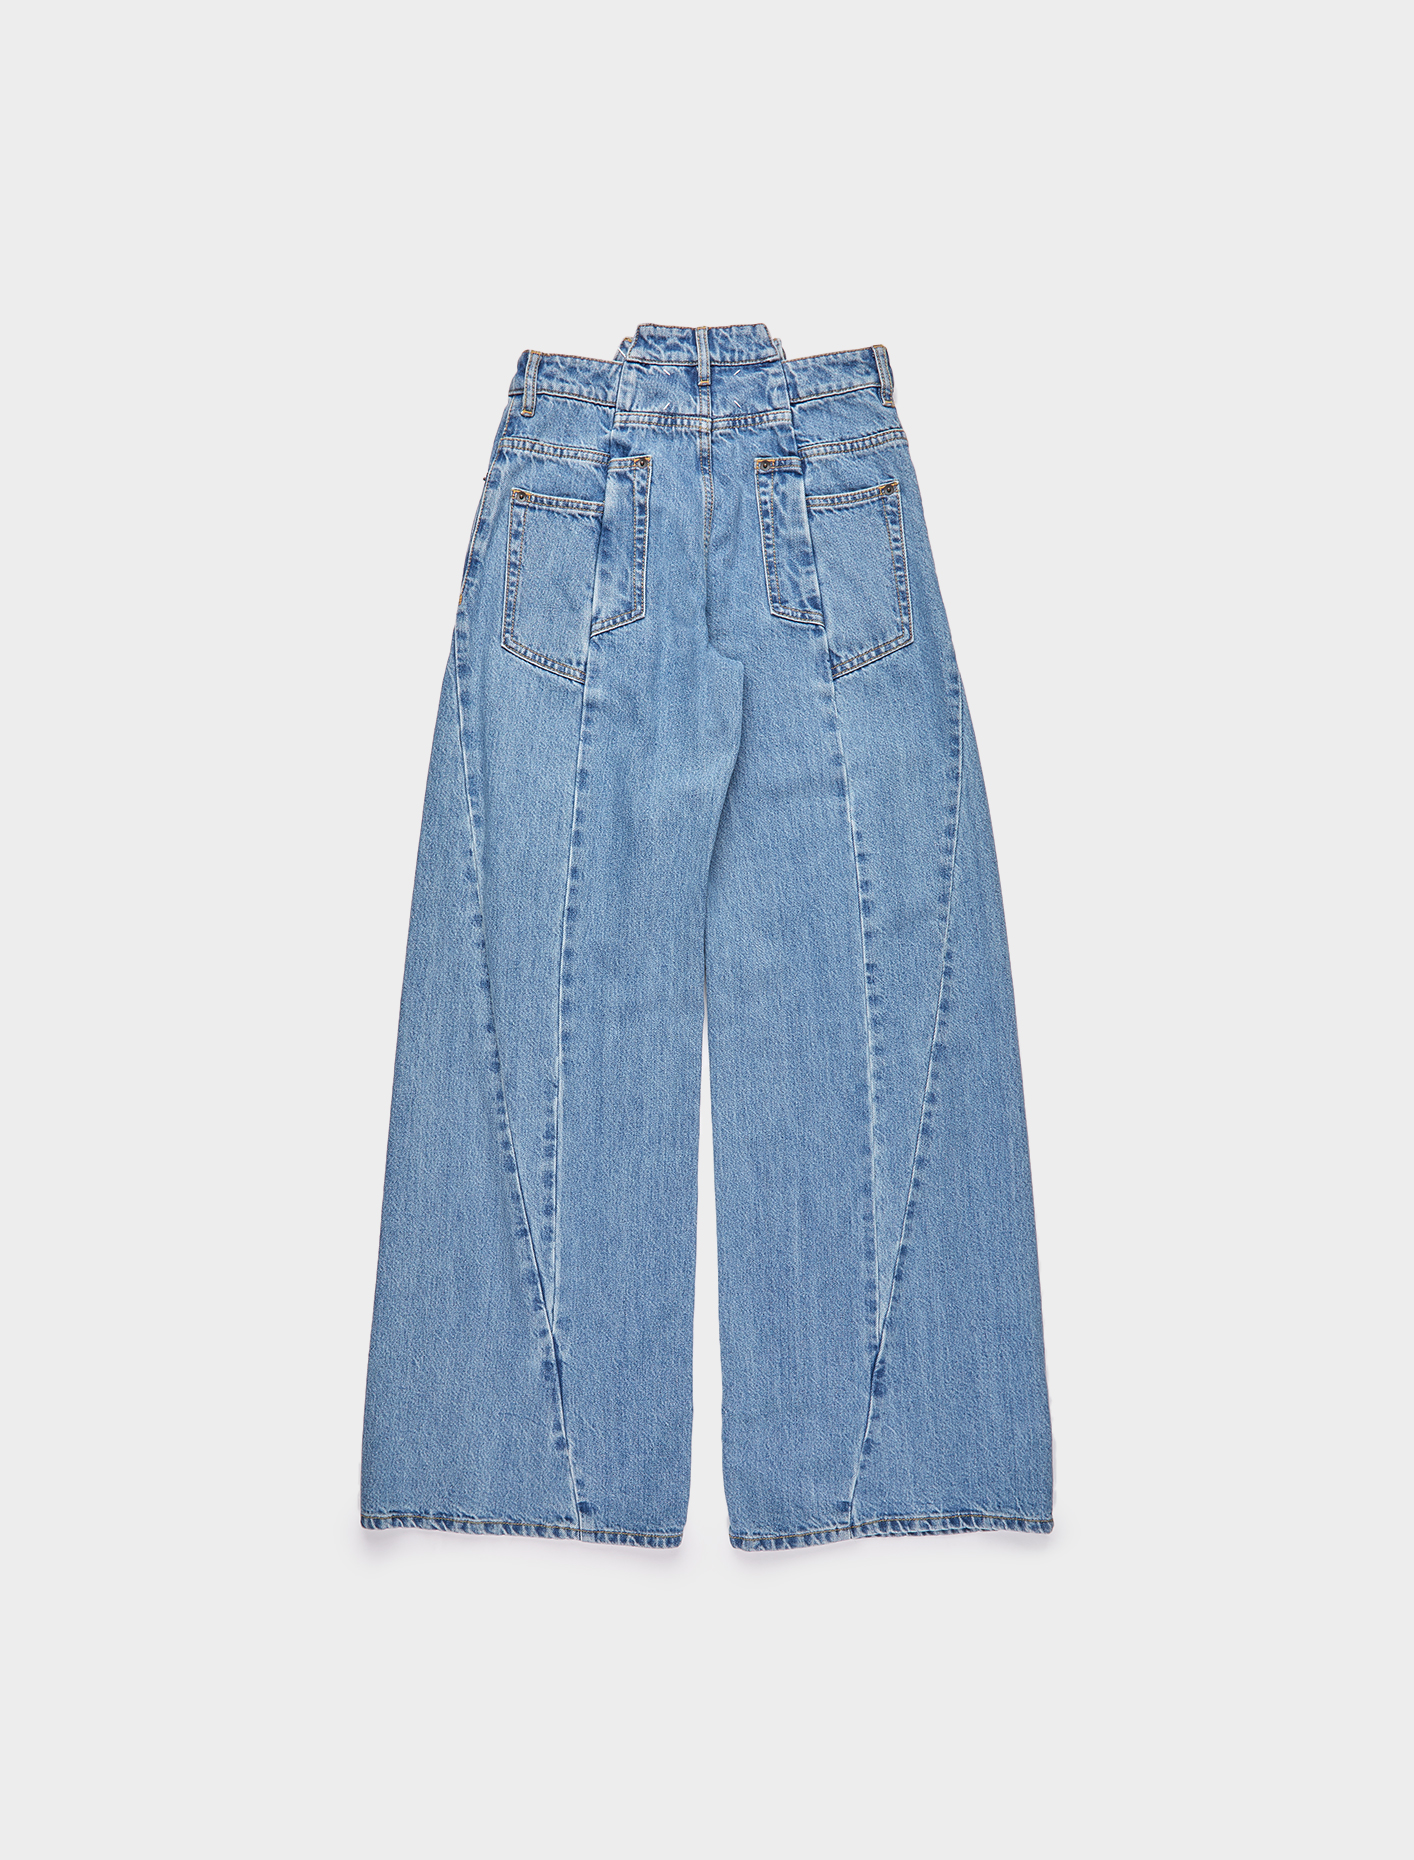 Maison Margiela Panel Jeans in Medium Blue Stone Wash | Voo Store ...